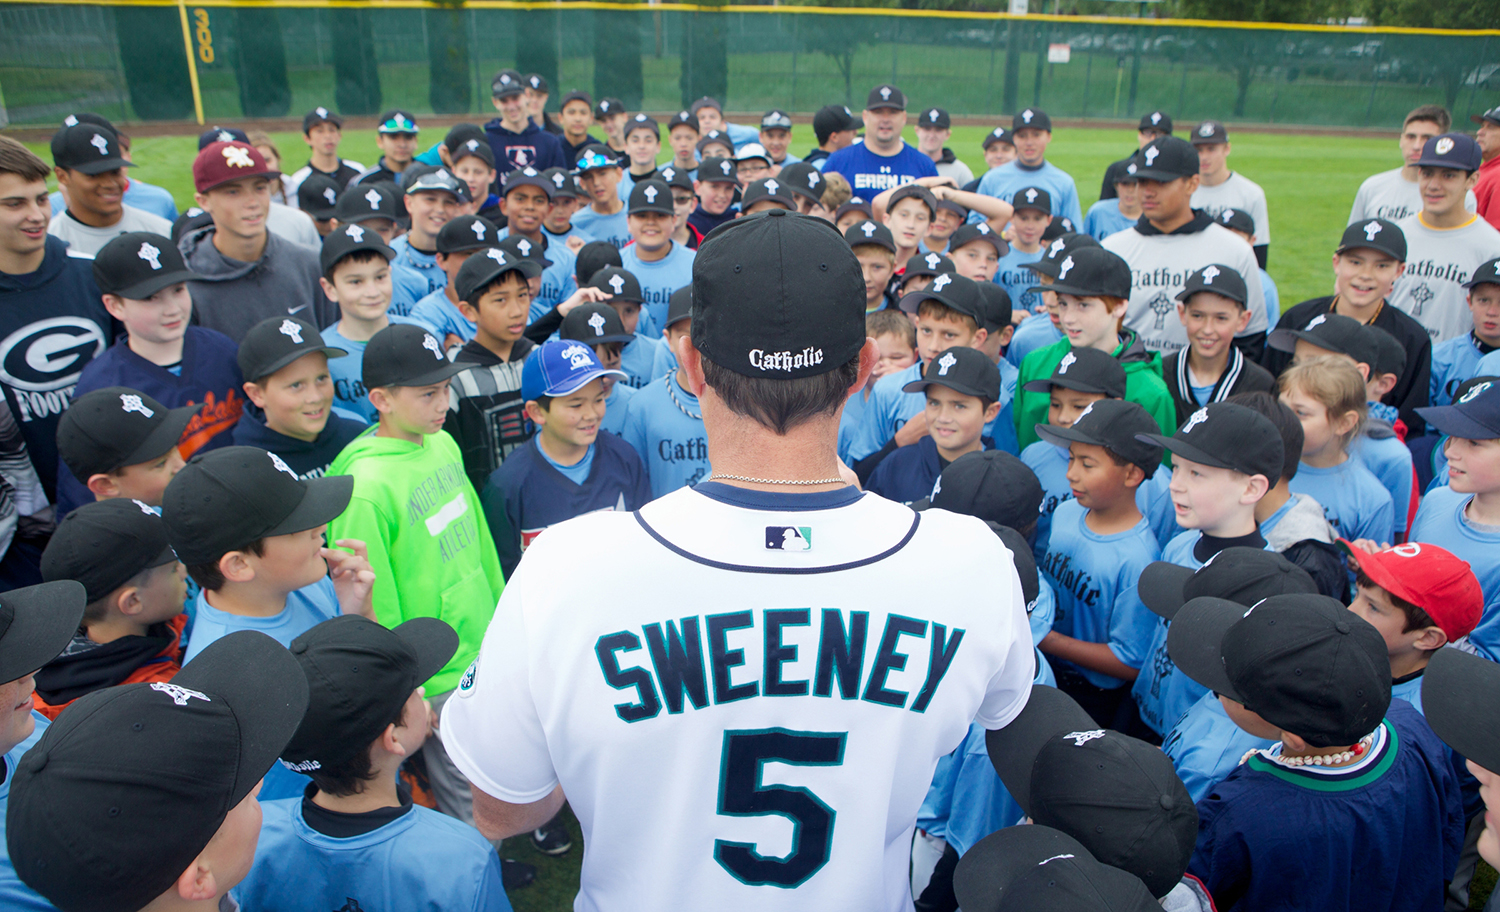 5X MLB All-Star Mike Sweeney Loves Ballparks of America